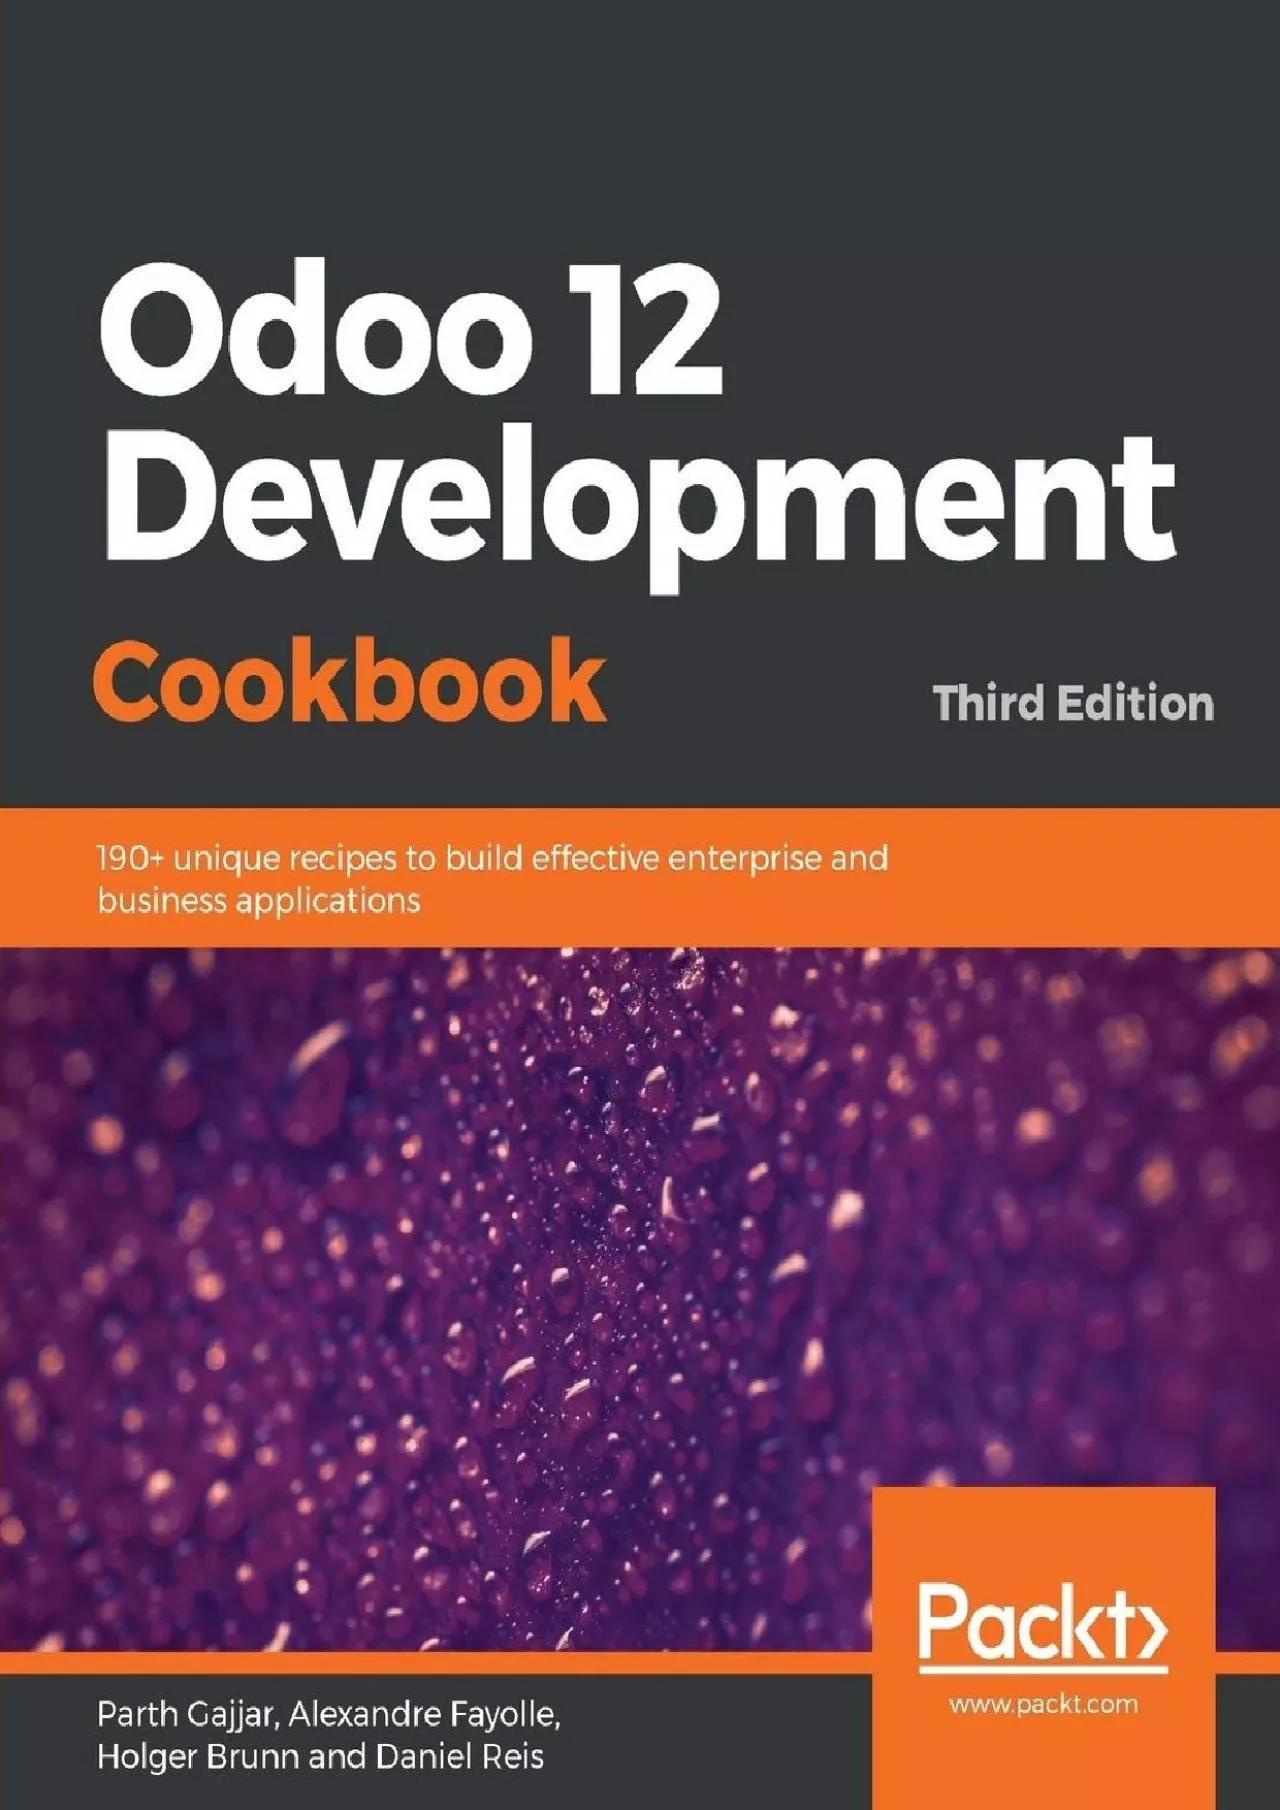 Odoo 12 Development Cookbook: 190+ unique recipes to build effective enterprise and business